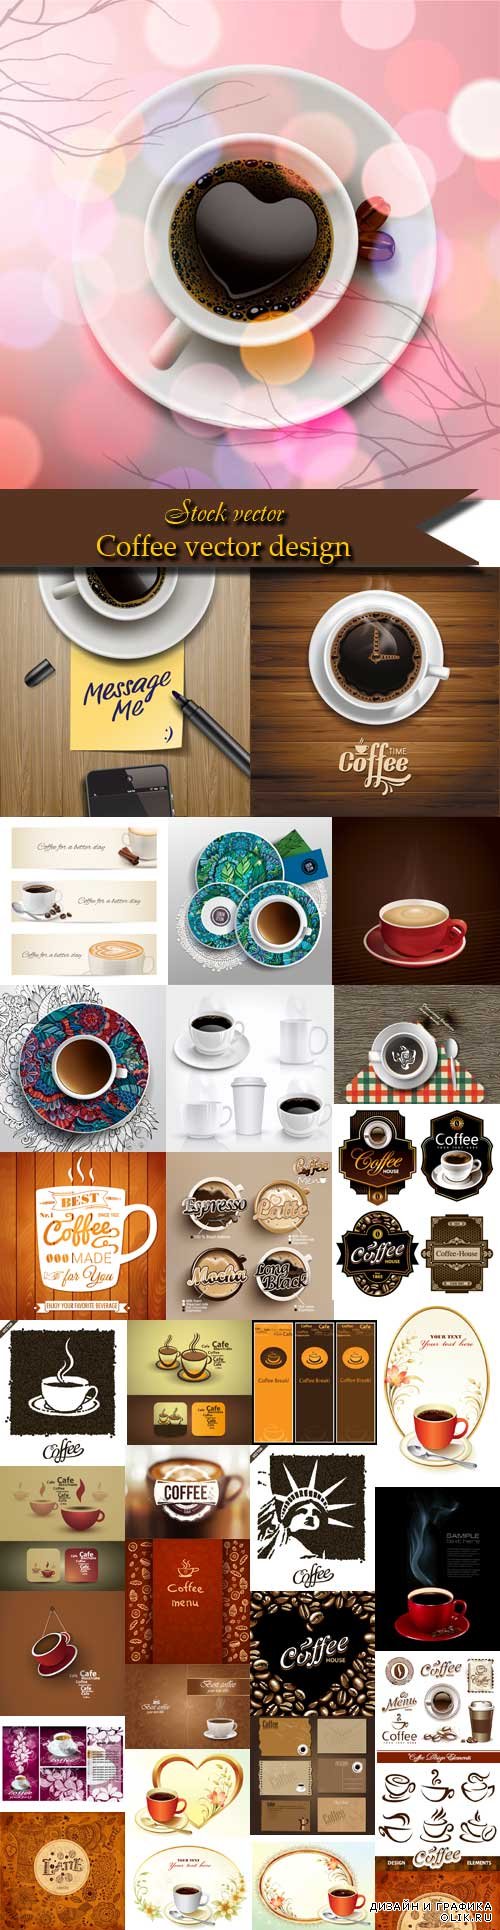 Coffee vector design